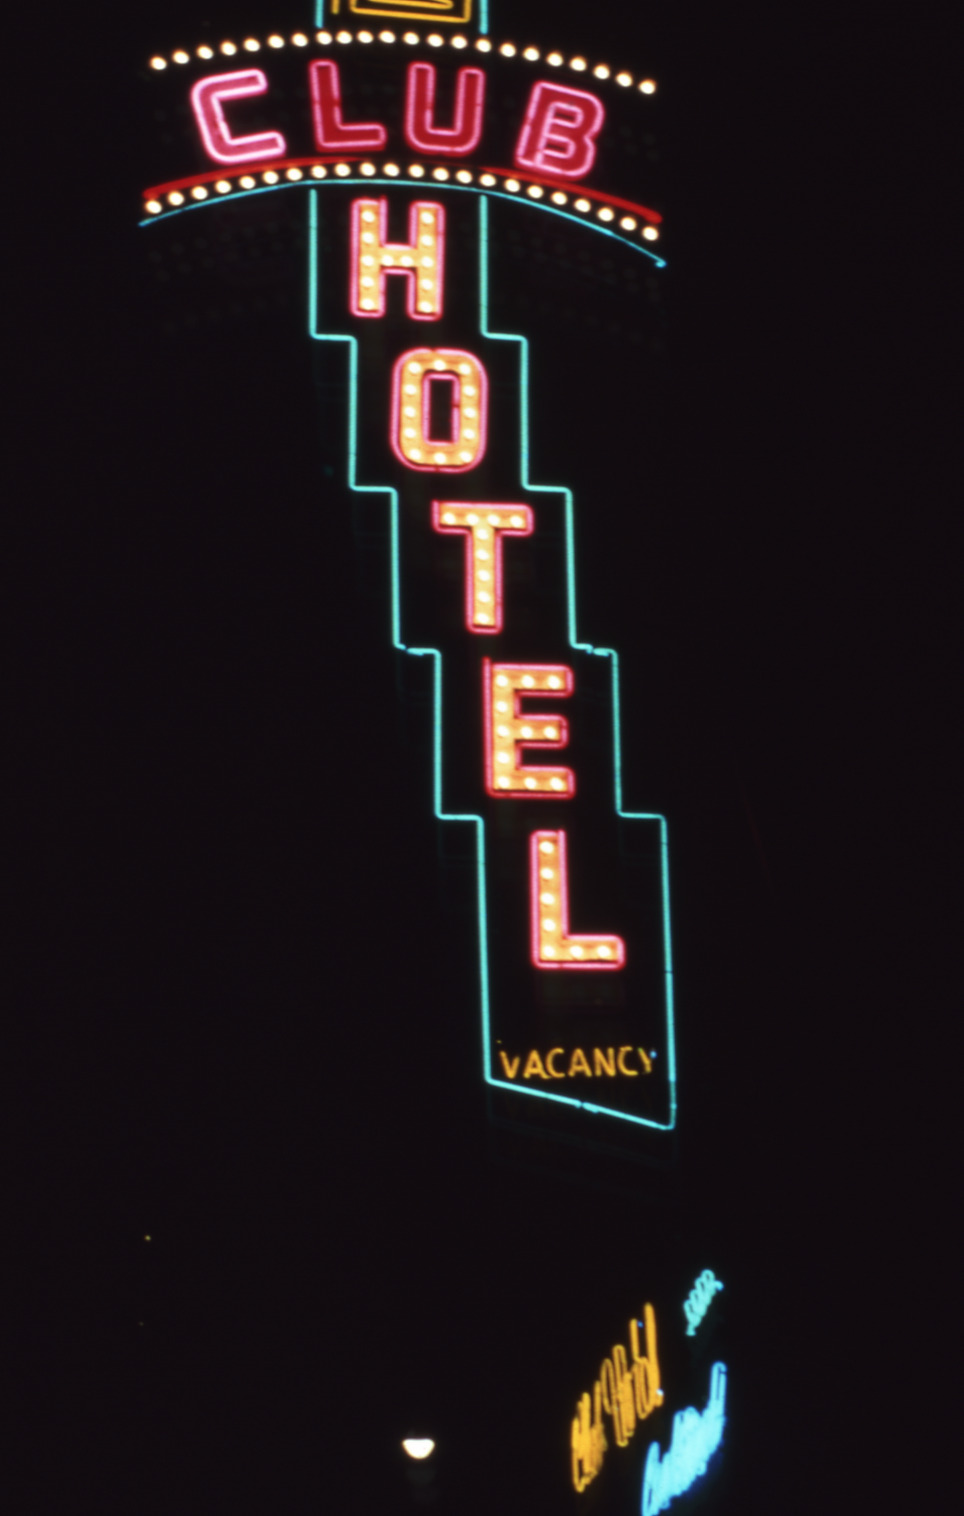 Club Hotel sign, Las Vegas, Nevada: photographic print